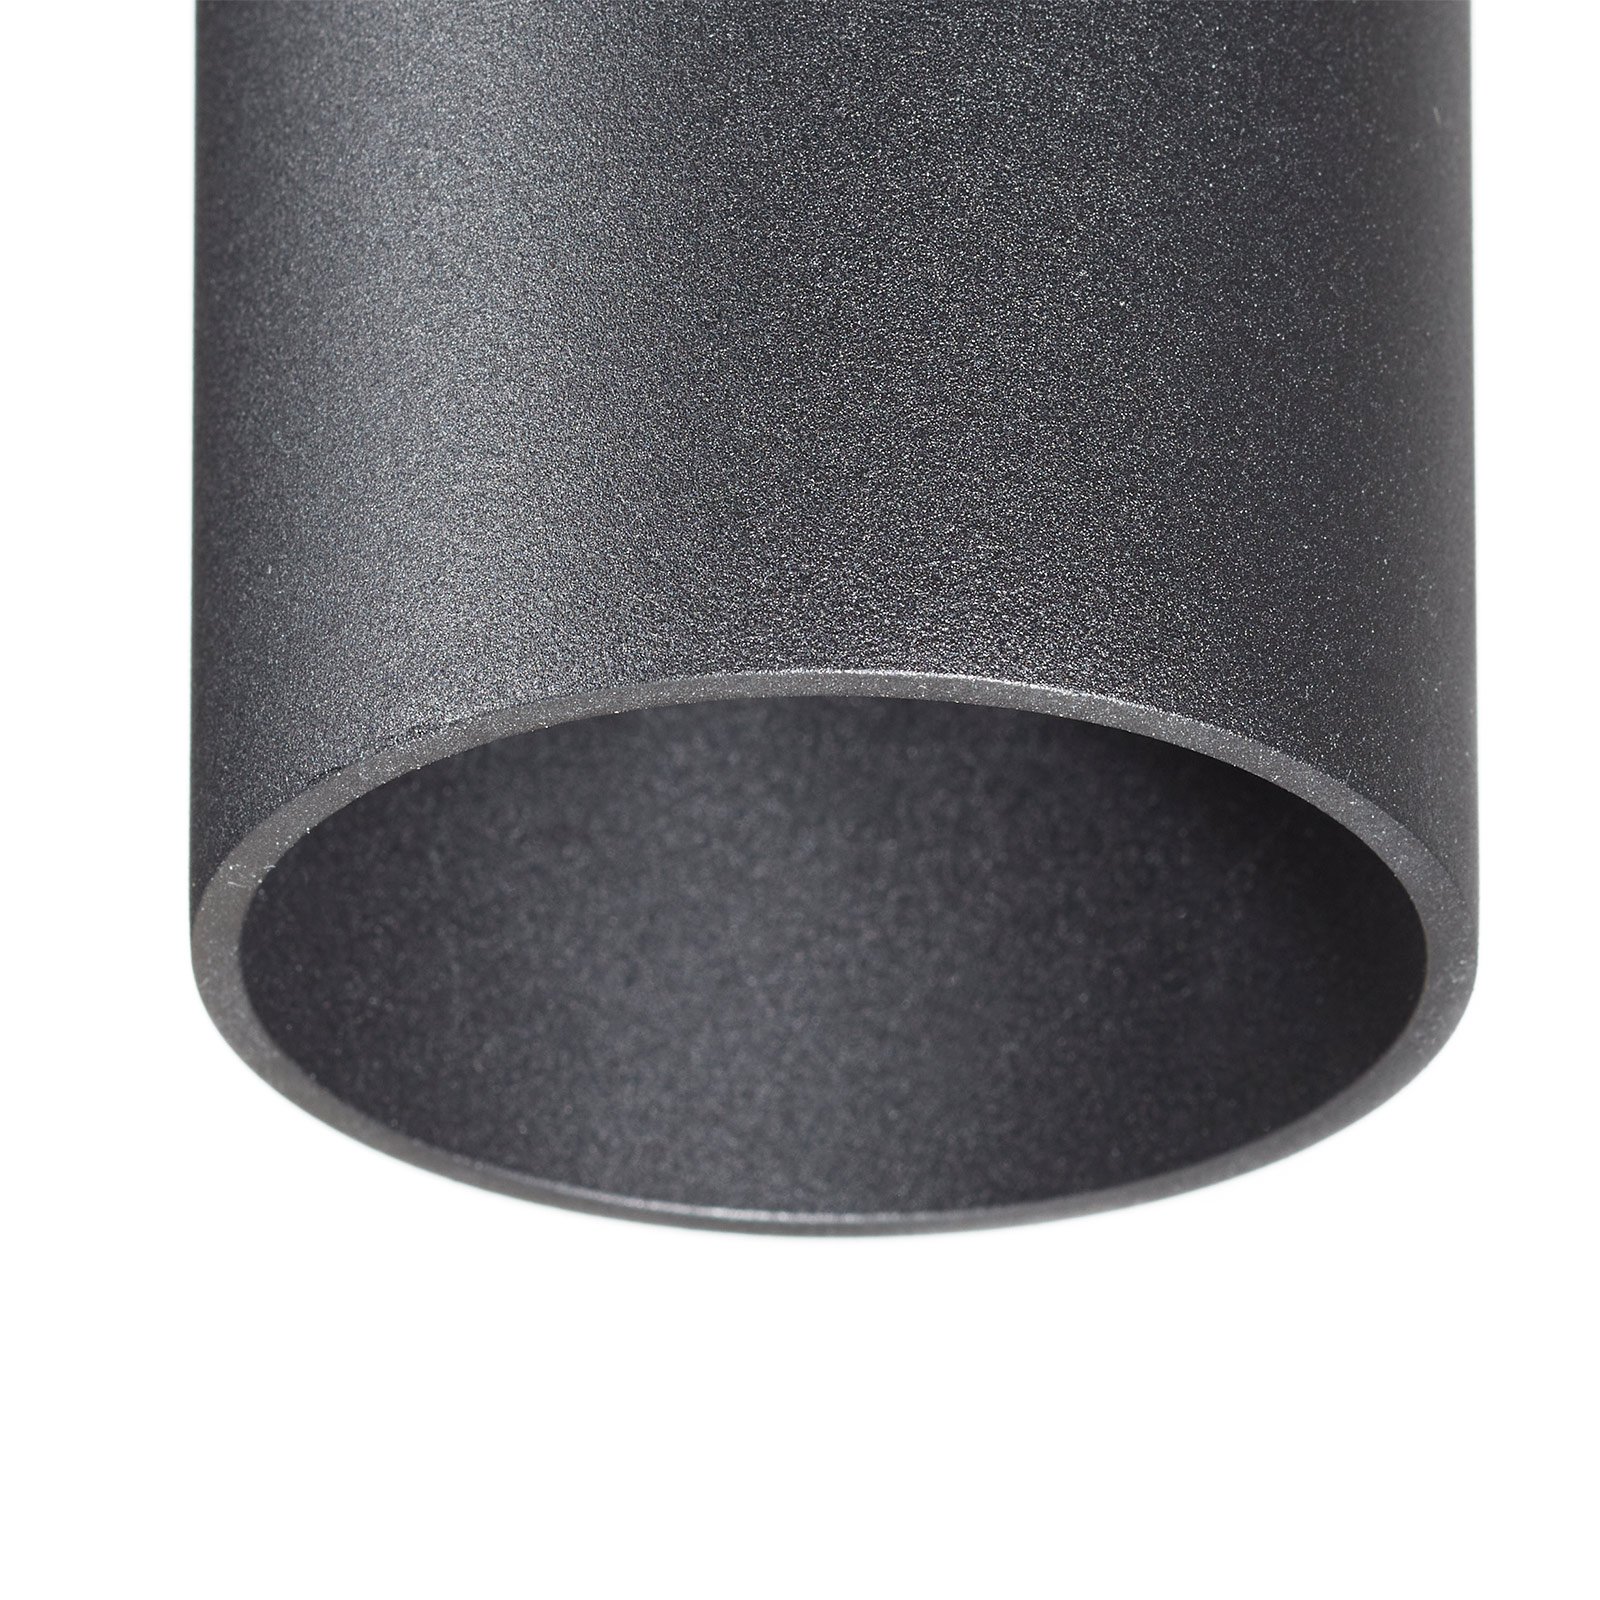 WEVER & DUCRÉ Ray mini 2.0 nástenné svietidlo čierne